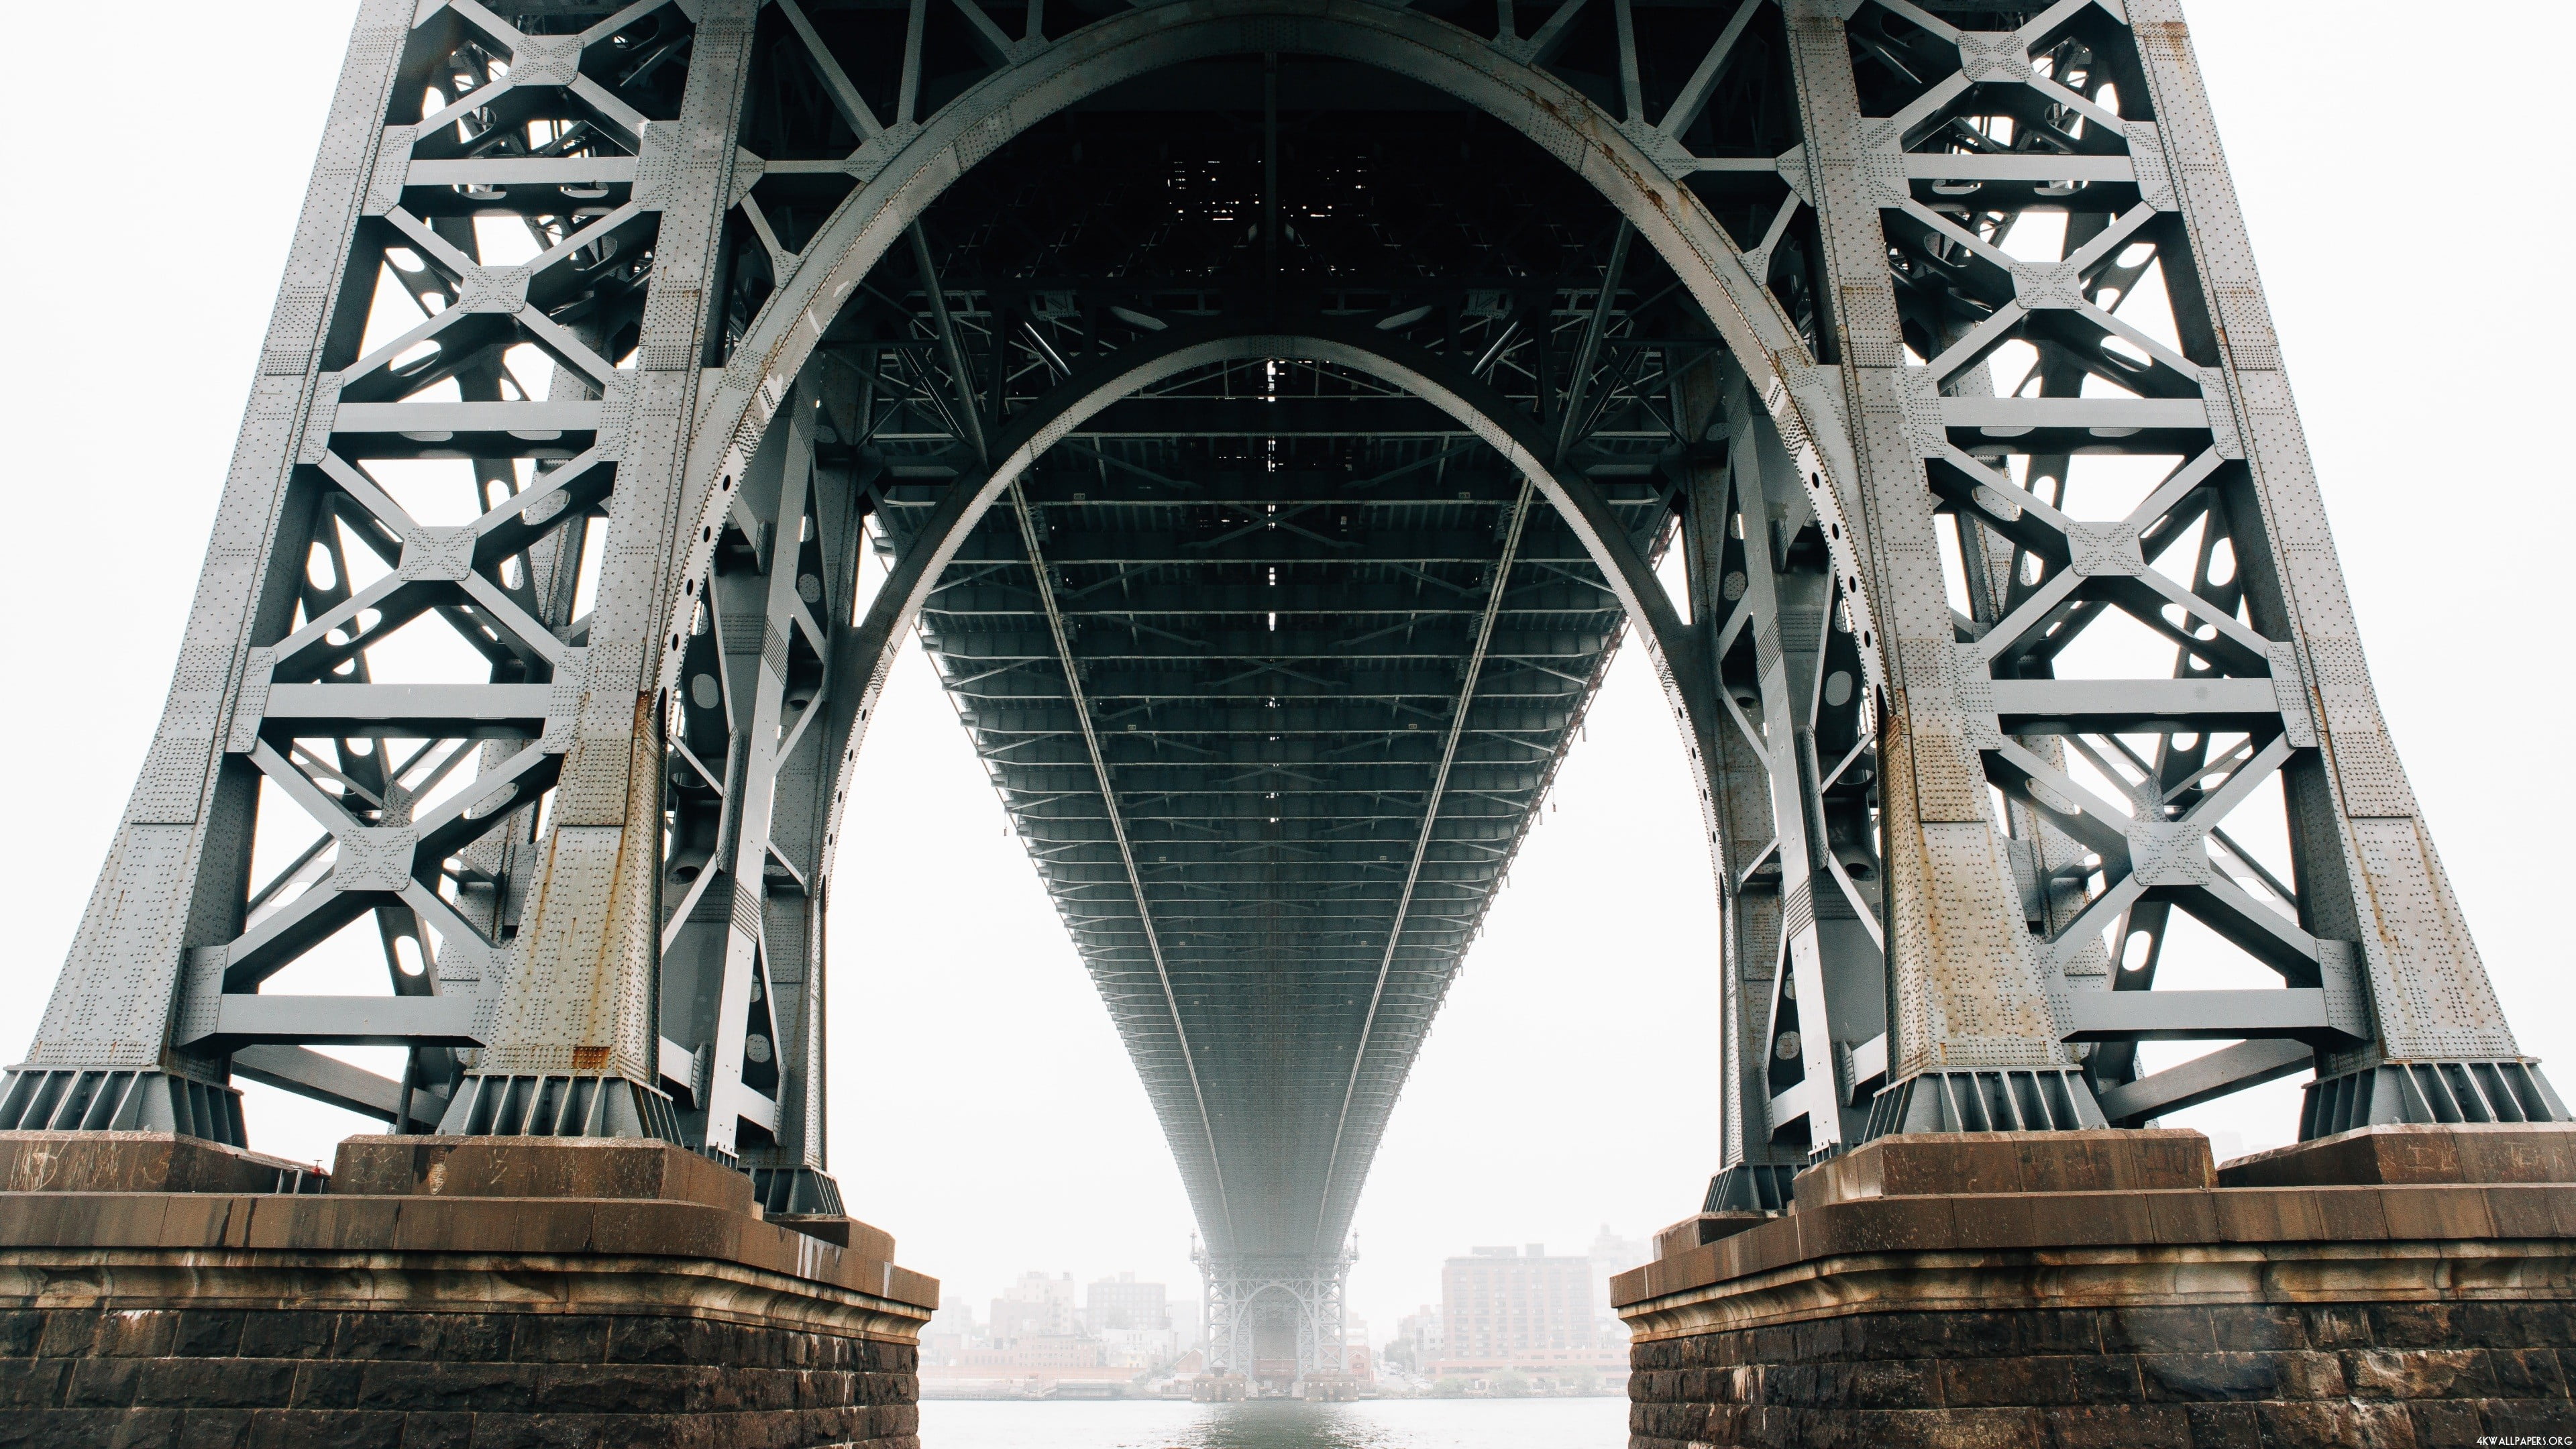 gray metal bridge, architecture, bridge, New York City, Brooklyn